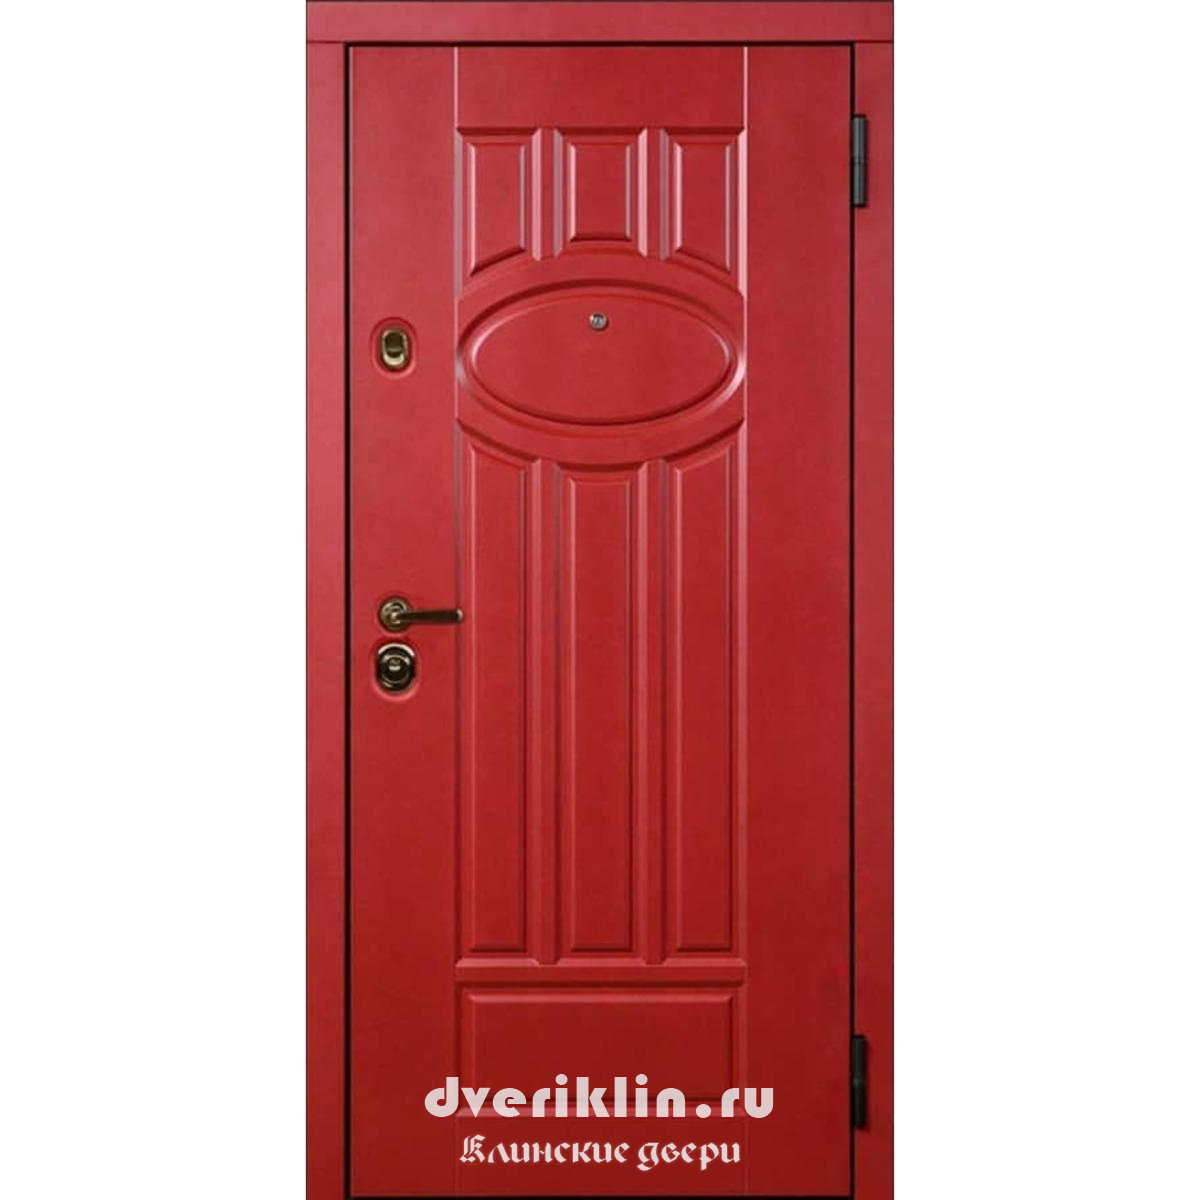 Дверь в квартиру MK-01 (В квартиру)